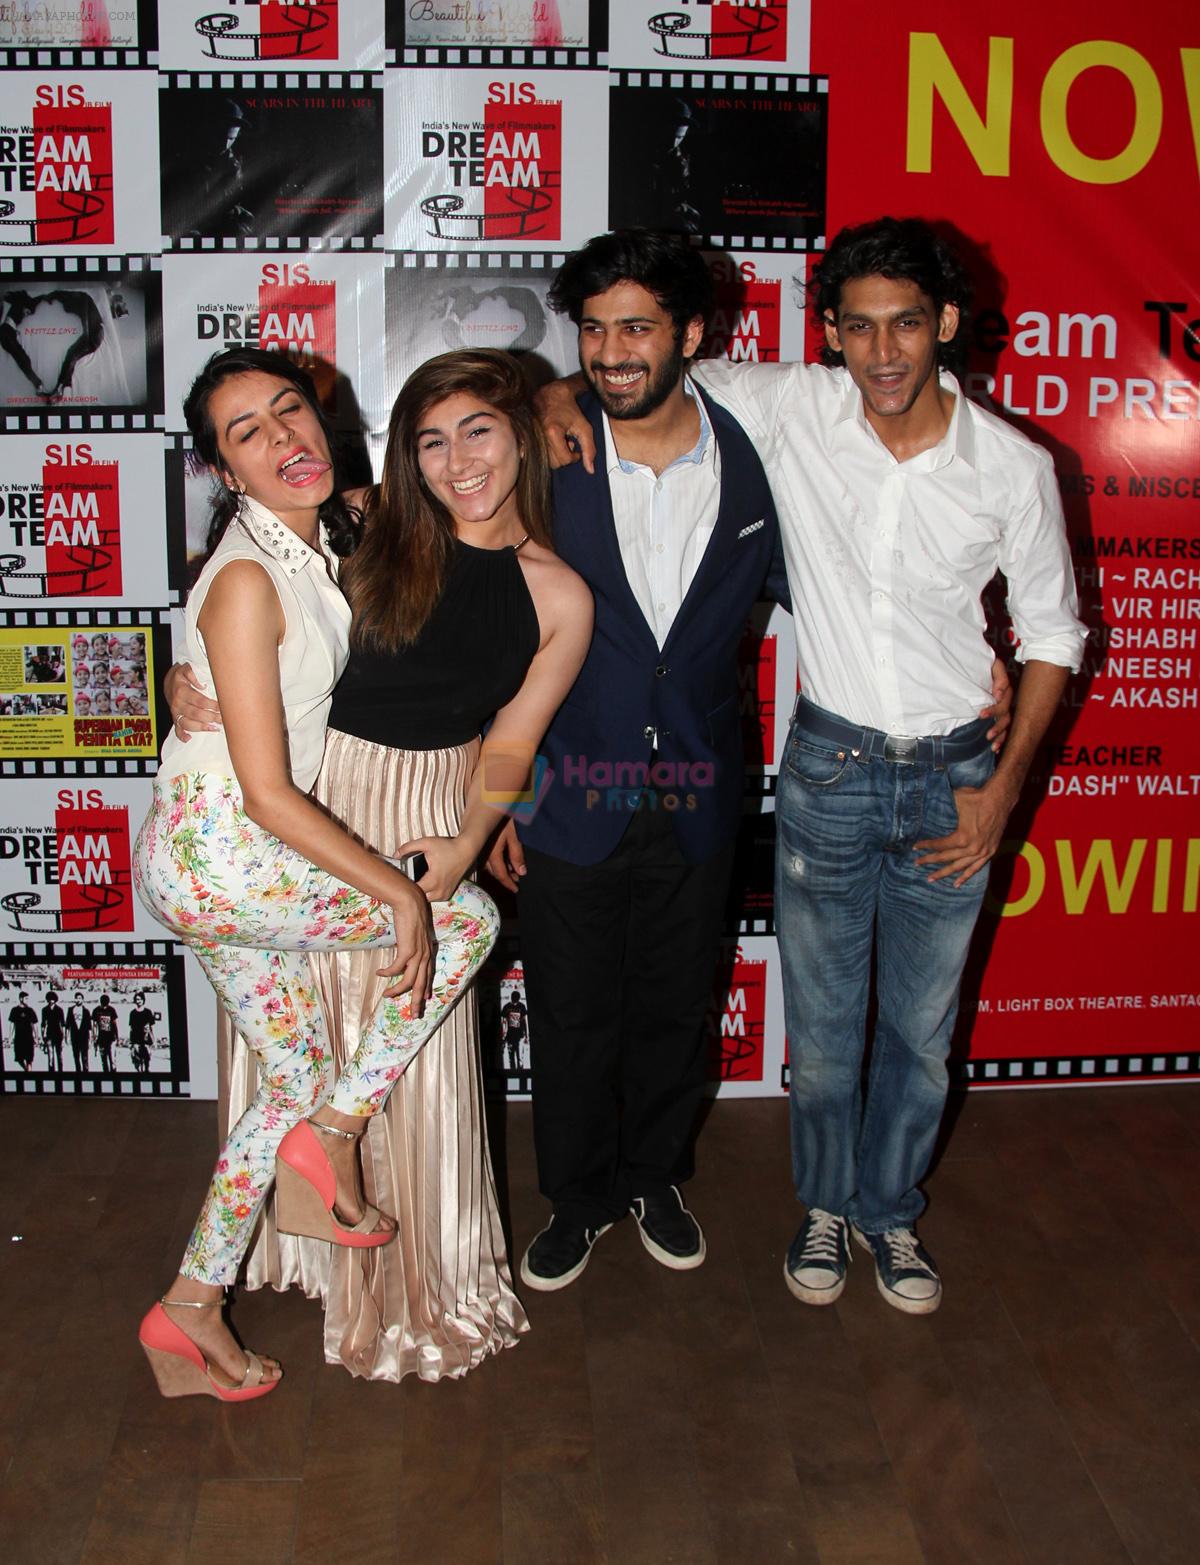 Giaa Singh Arora, Rachael Singh, Aaryamann Sethi and Karan Ghosh 2 at the premiere of films by starkids